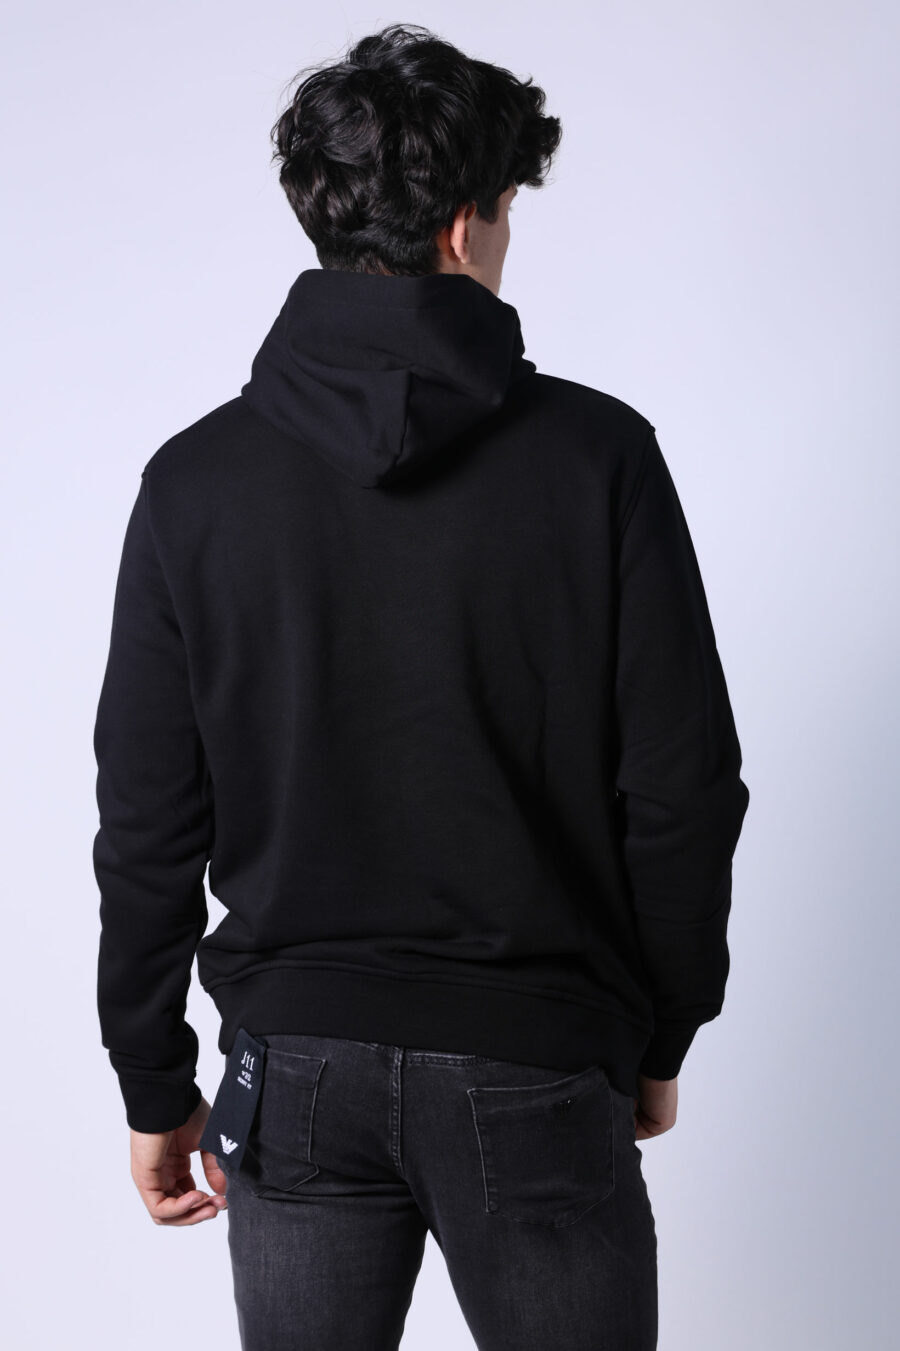 Black hooded sweatshirt with monochrome rubber mini-logo - Untitled Catalog 05770 1